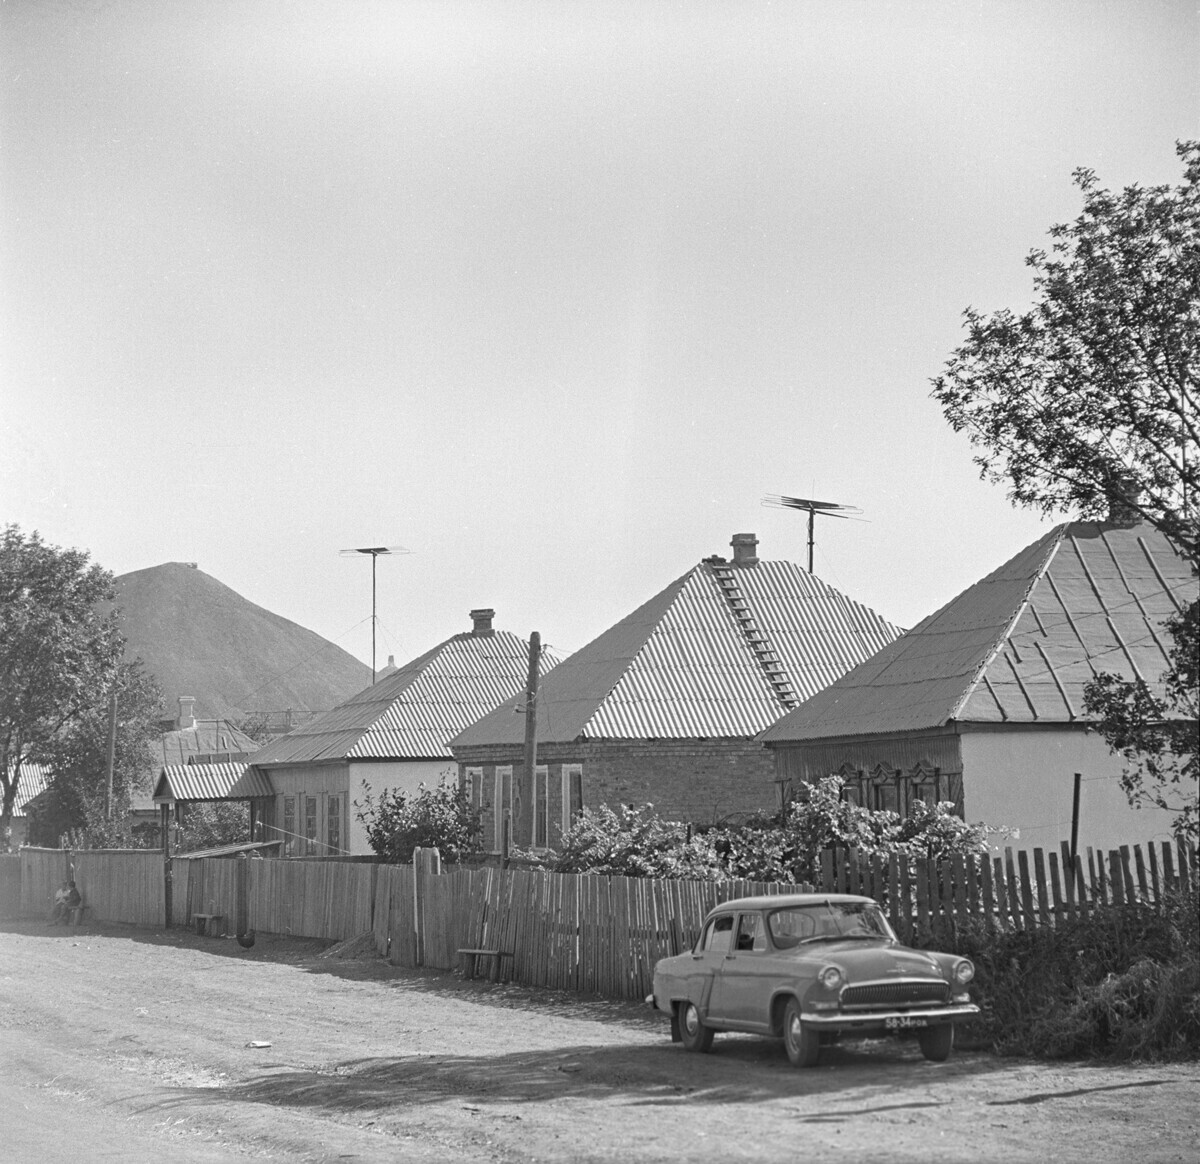 Vilarejo Marte perto de Rostov-no-Don, 1969

